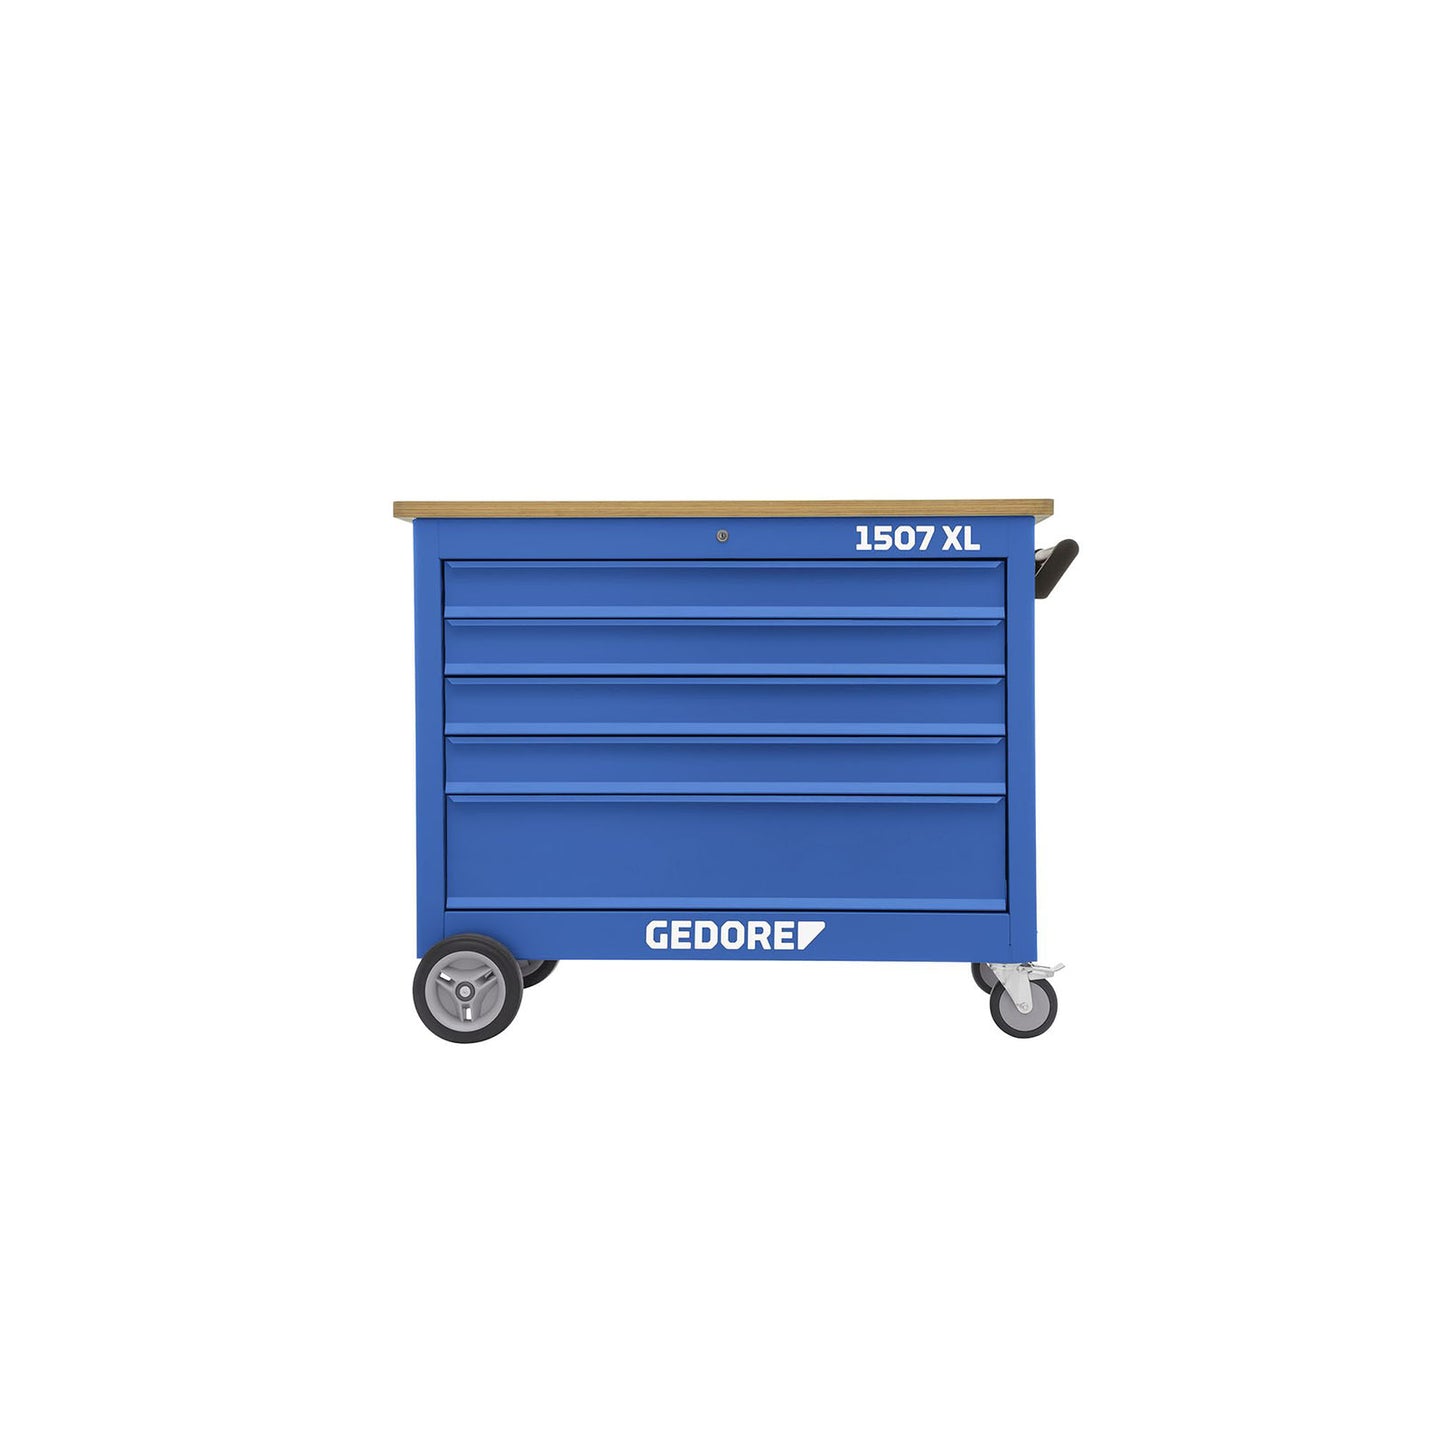 GEDORE 1507 XL 04010 - XL workbench 5 drawers (3127818)